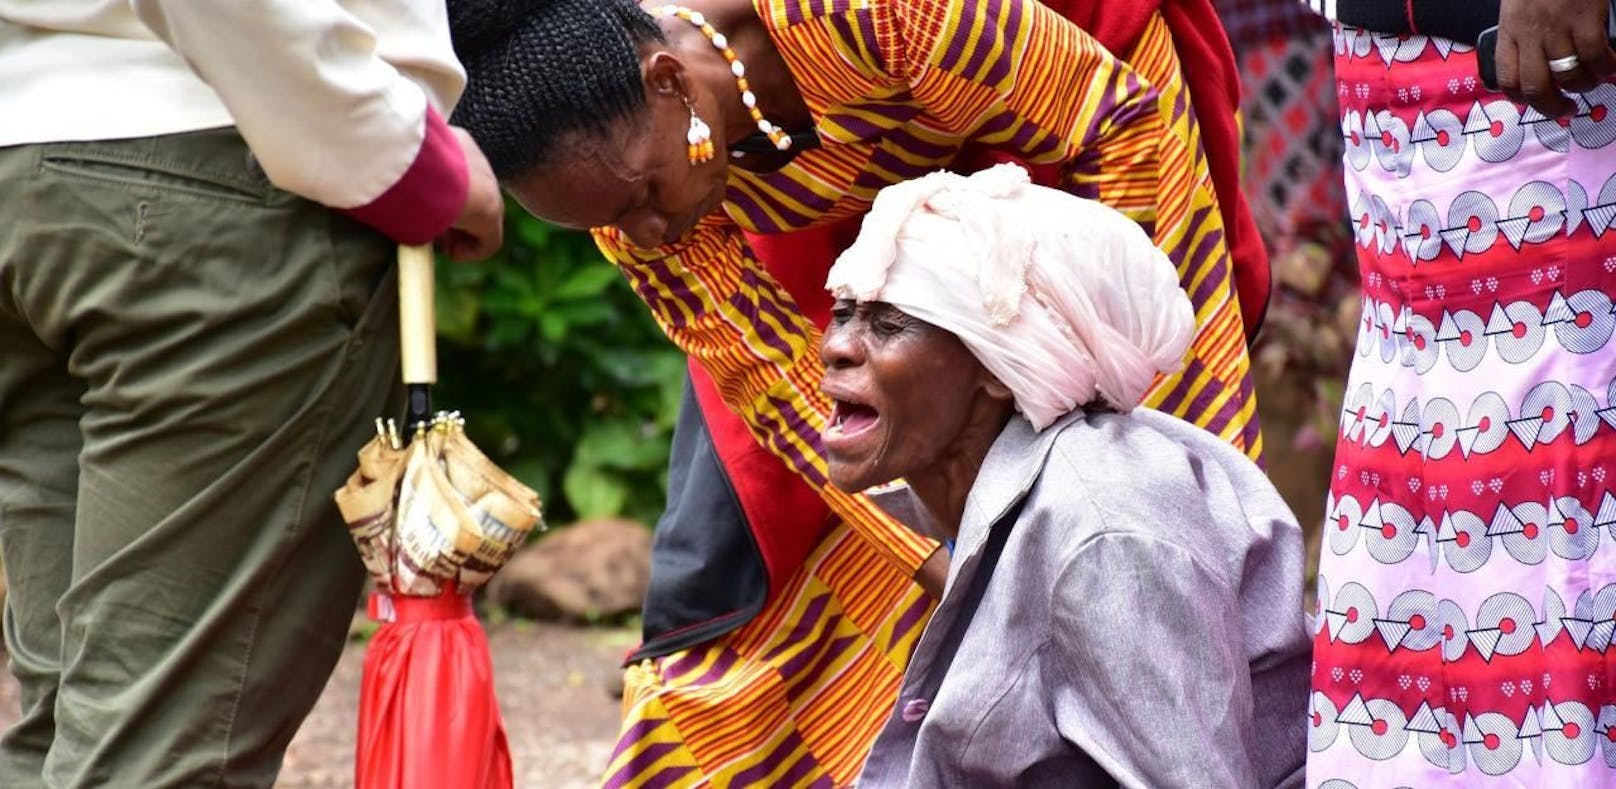 Mindestens 20 Tote bei Gottesdienst in Tansania